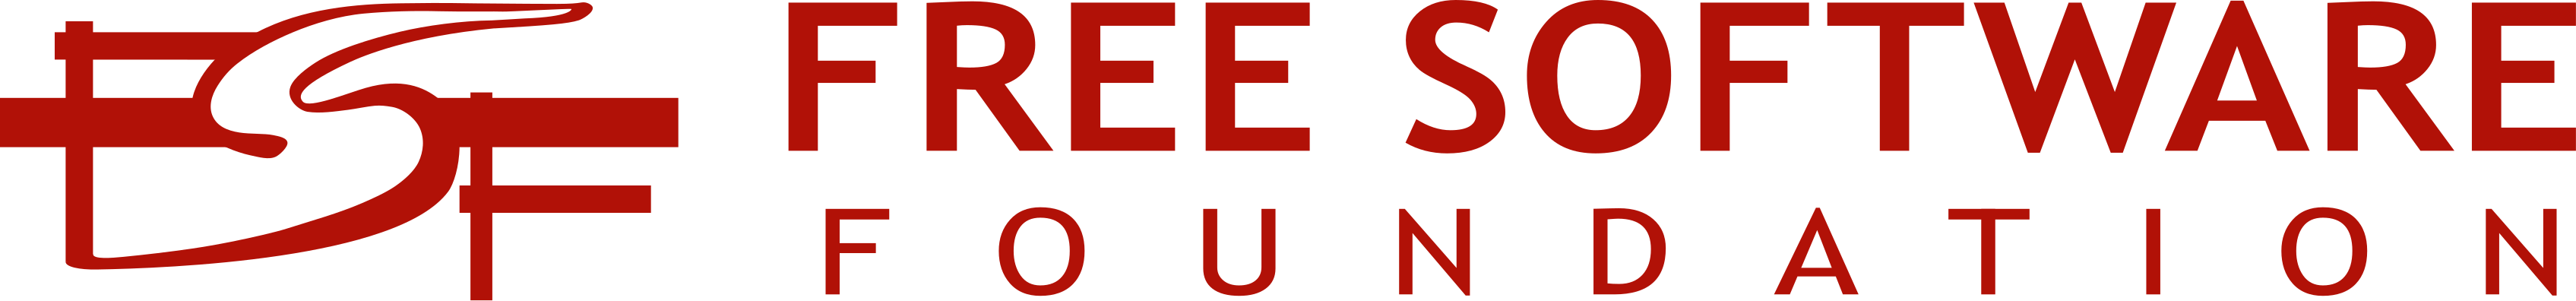 Download File:Free Software Foundation logo and wordmark.svg ...